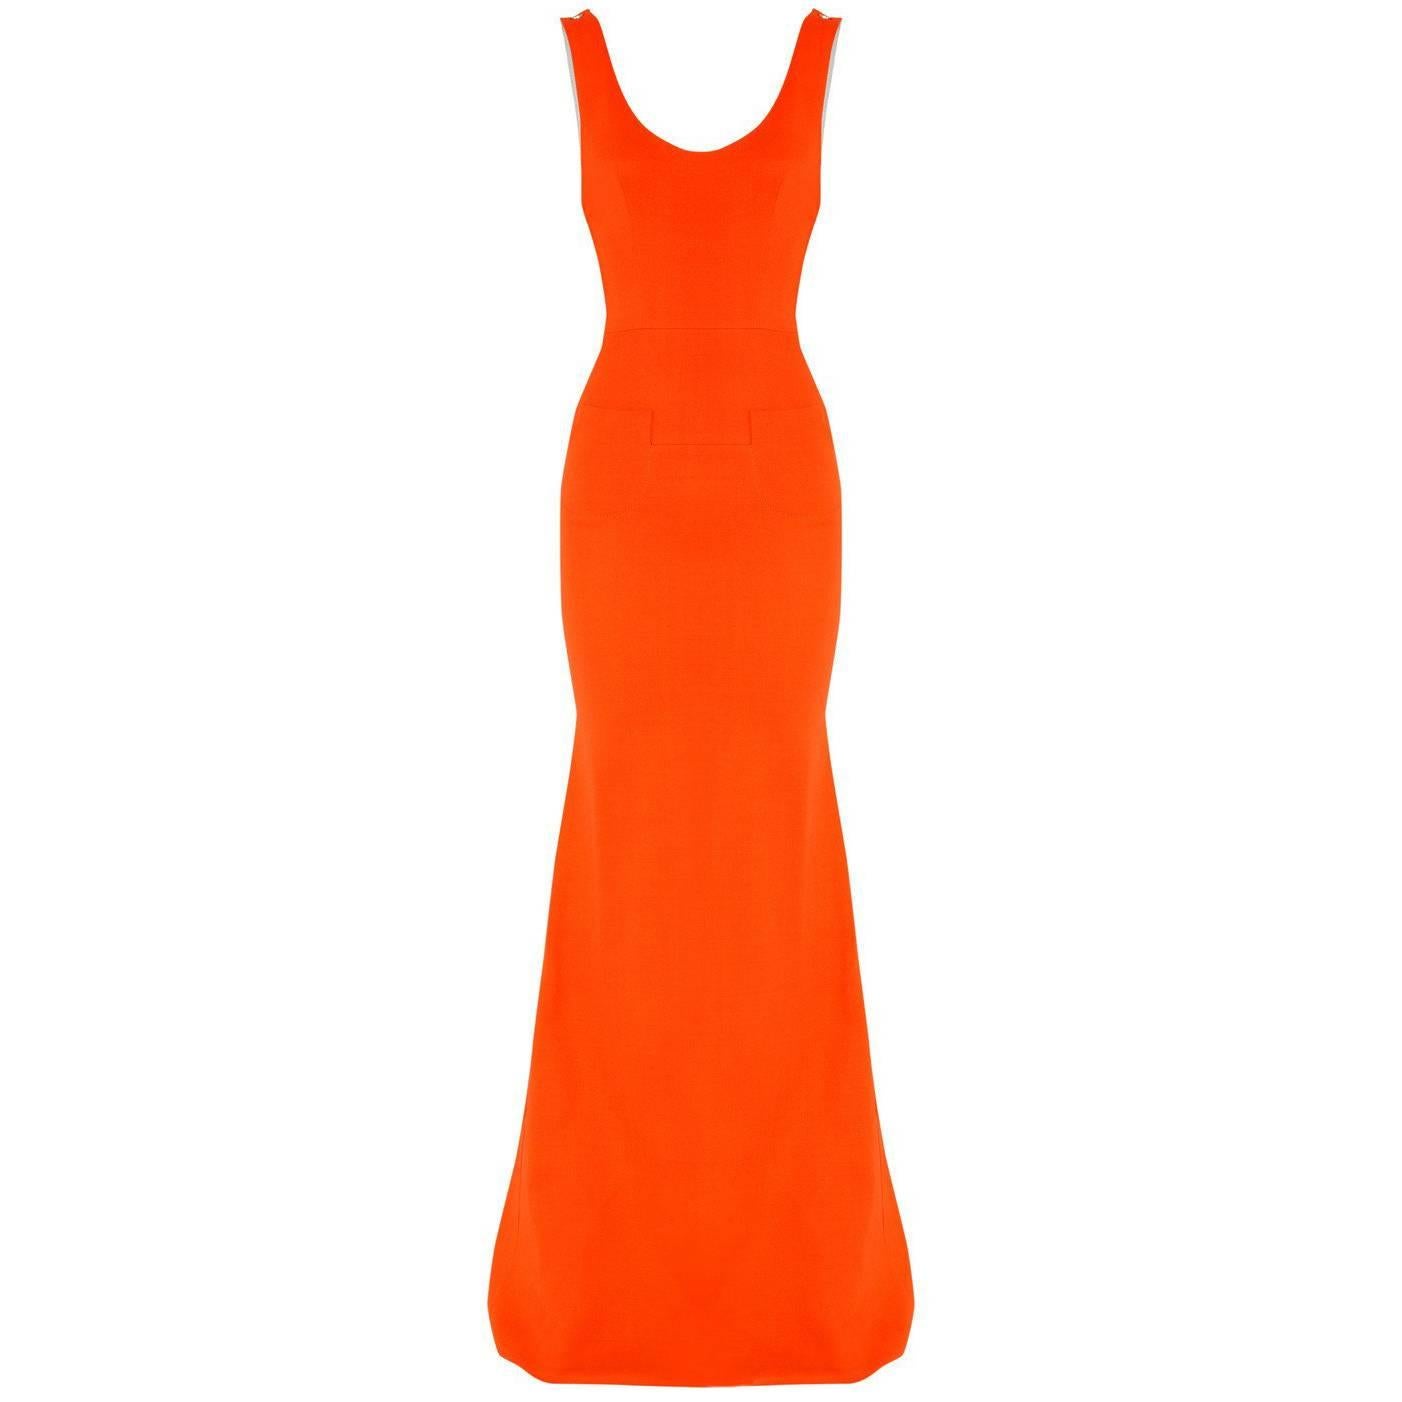 Victoria Beckham Tangerine Scoop Neck Gown (Size: US 10/L)  For Sale